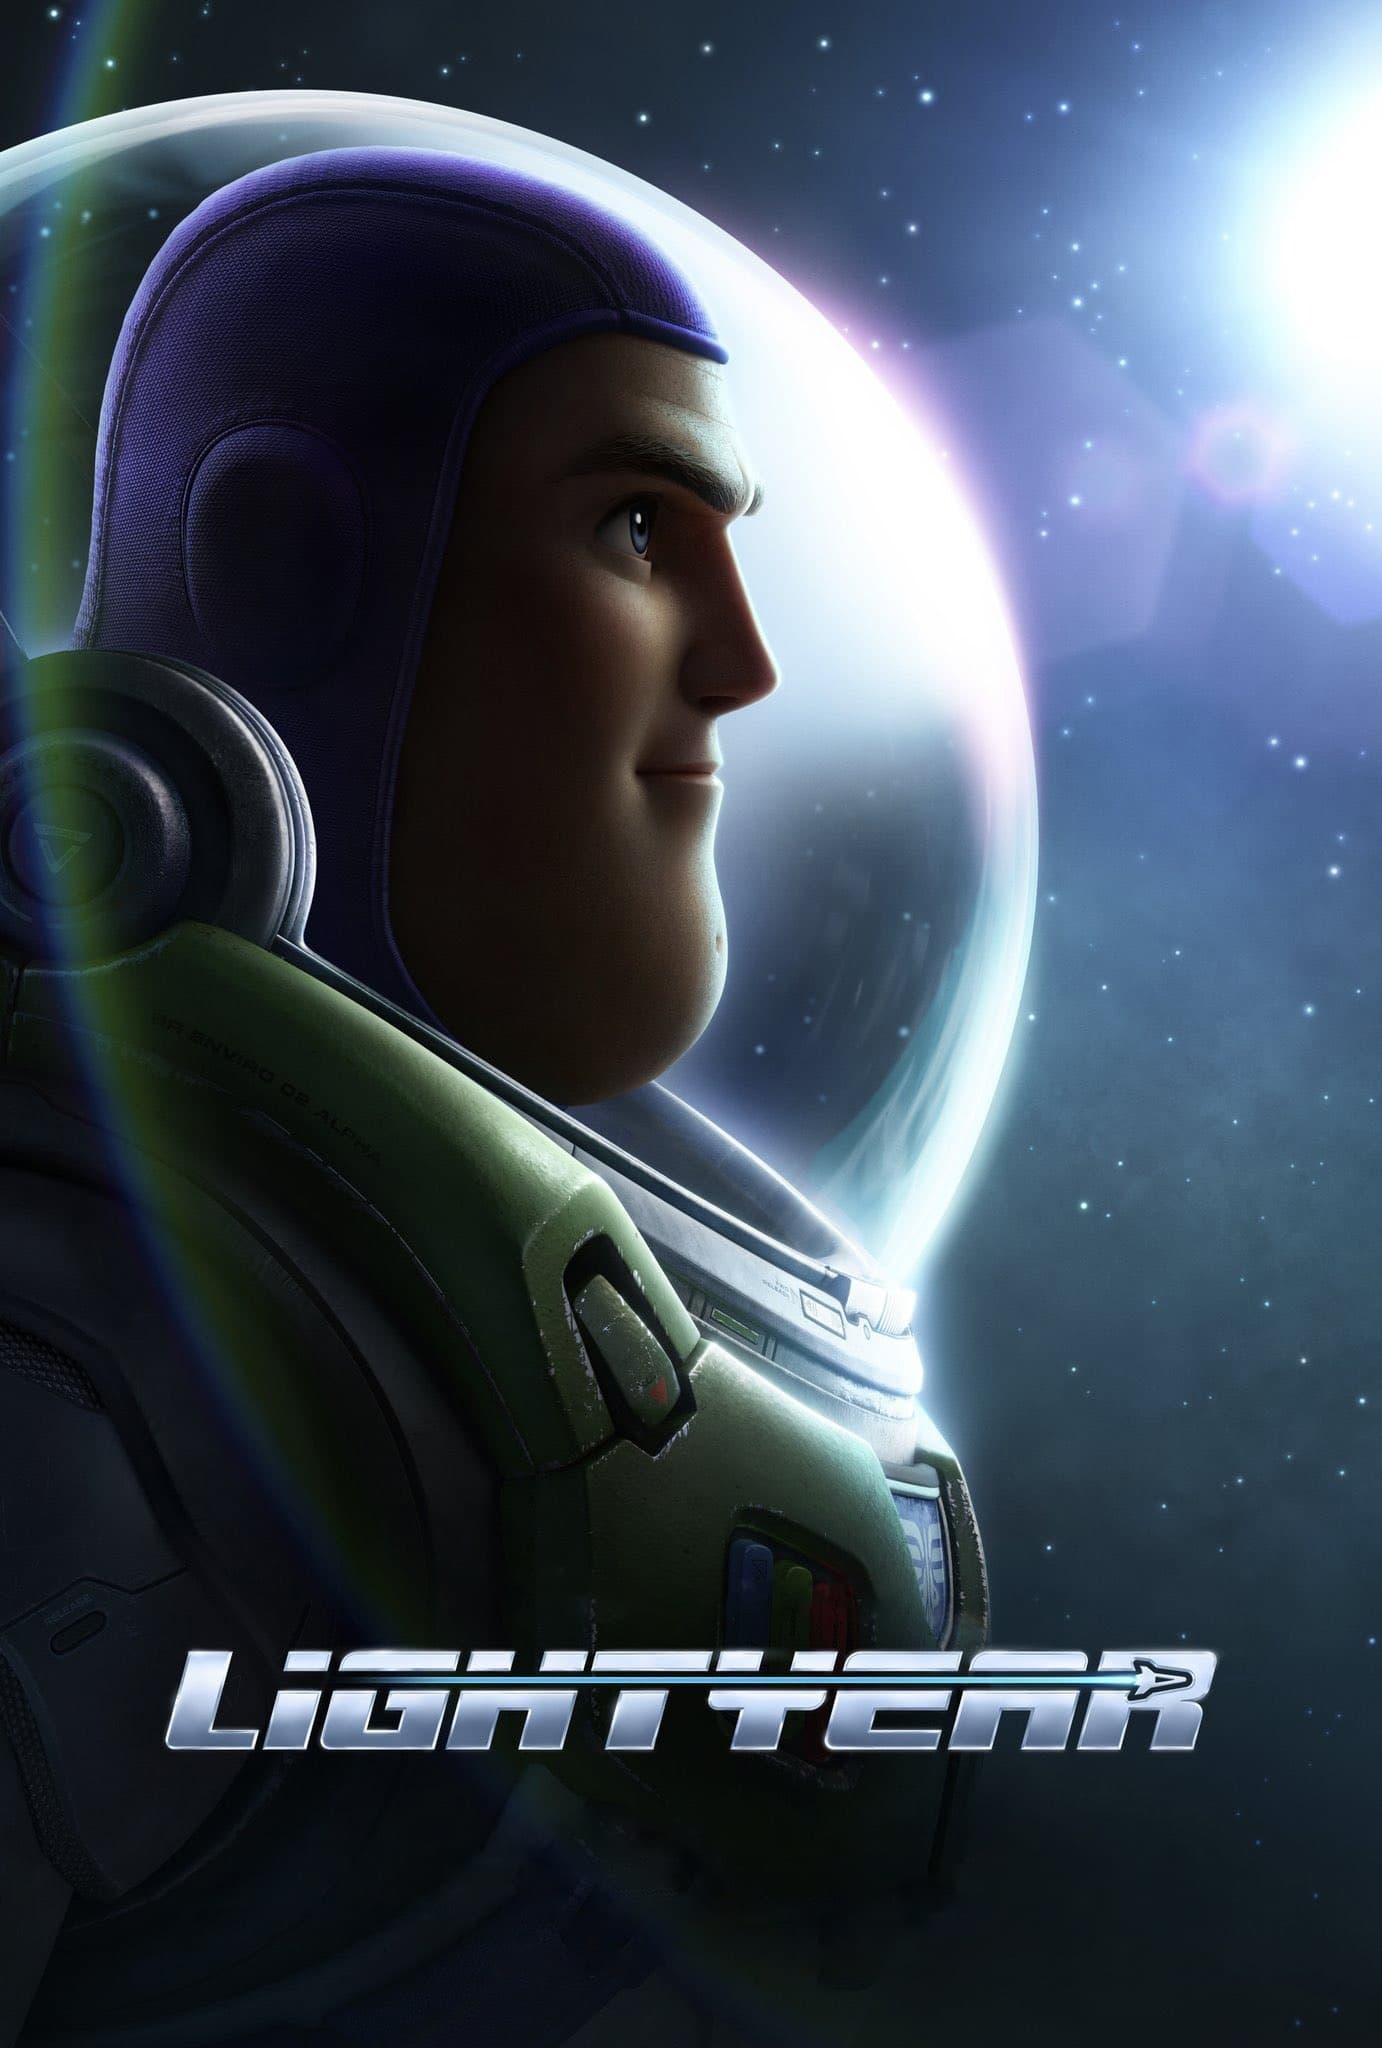 Lightyear (2022) English WEB-DL 1080p 720p & 480p x264 DD5.1 | Full Movie